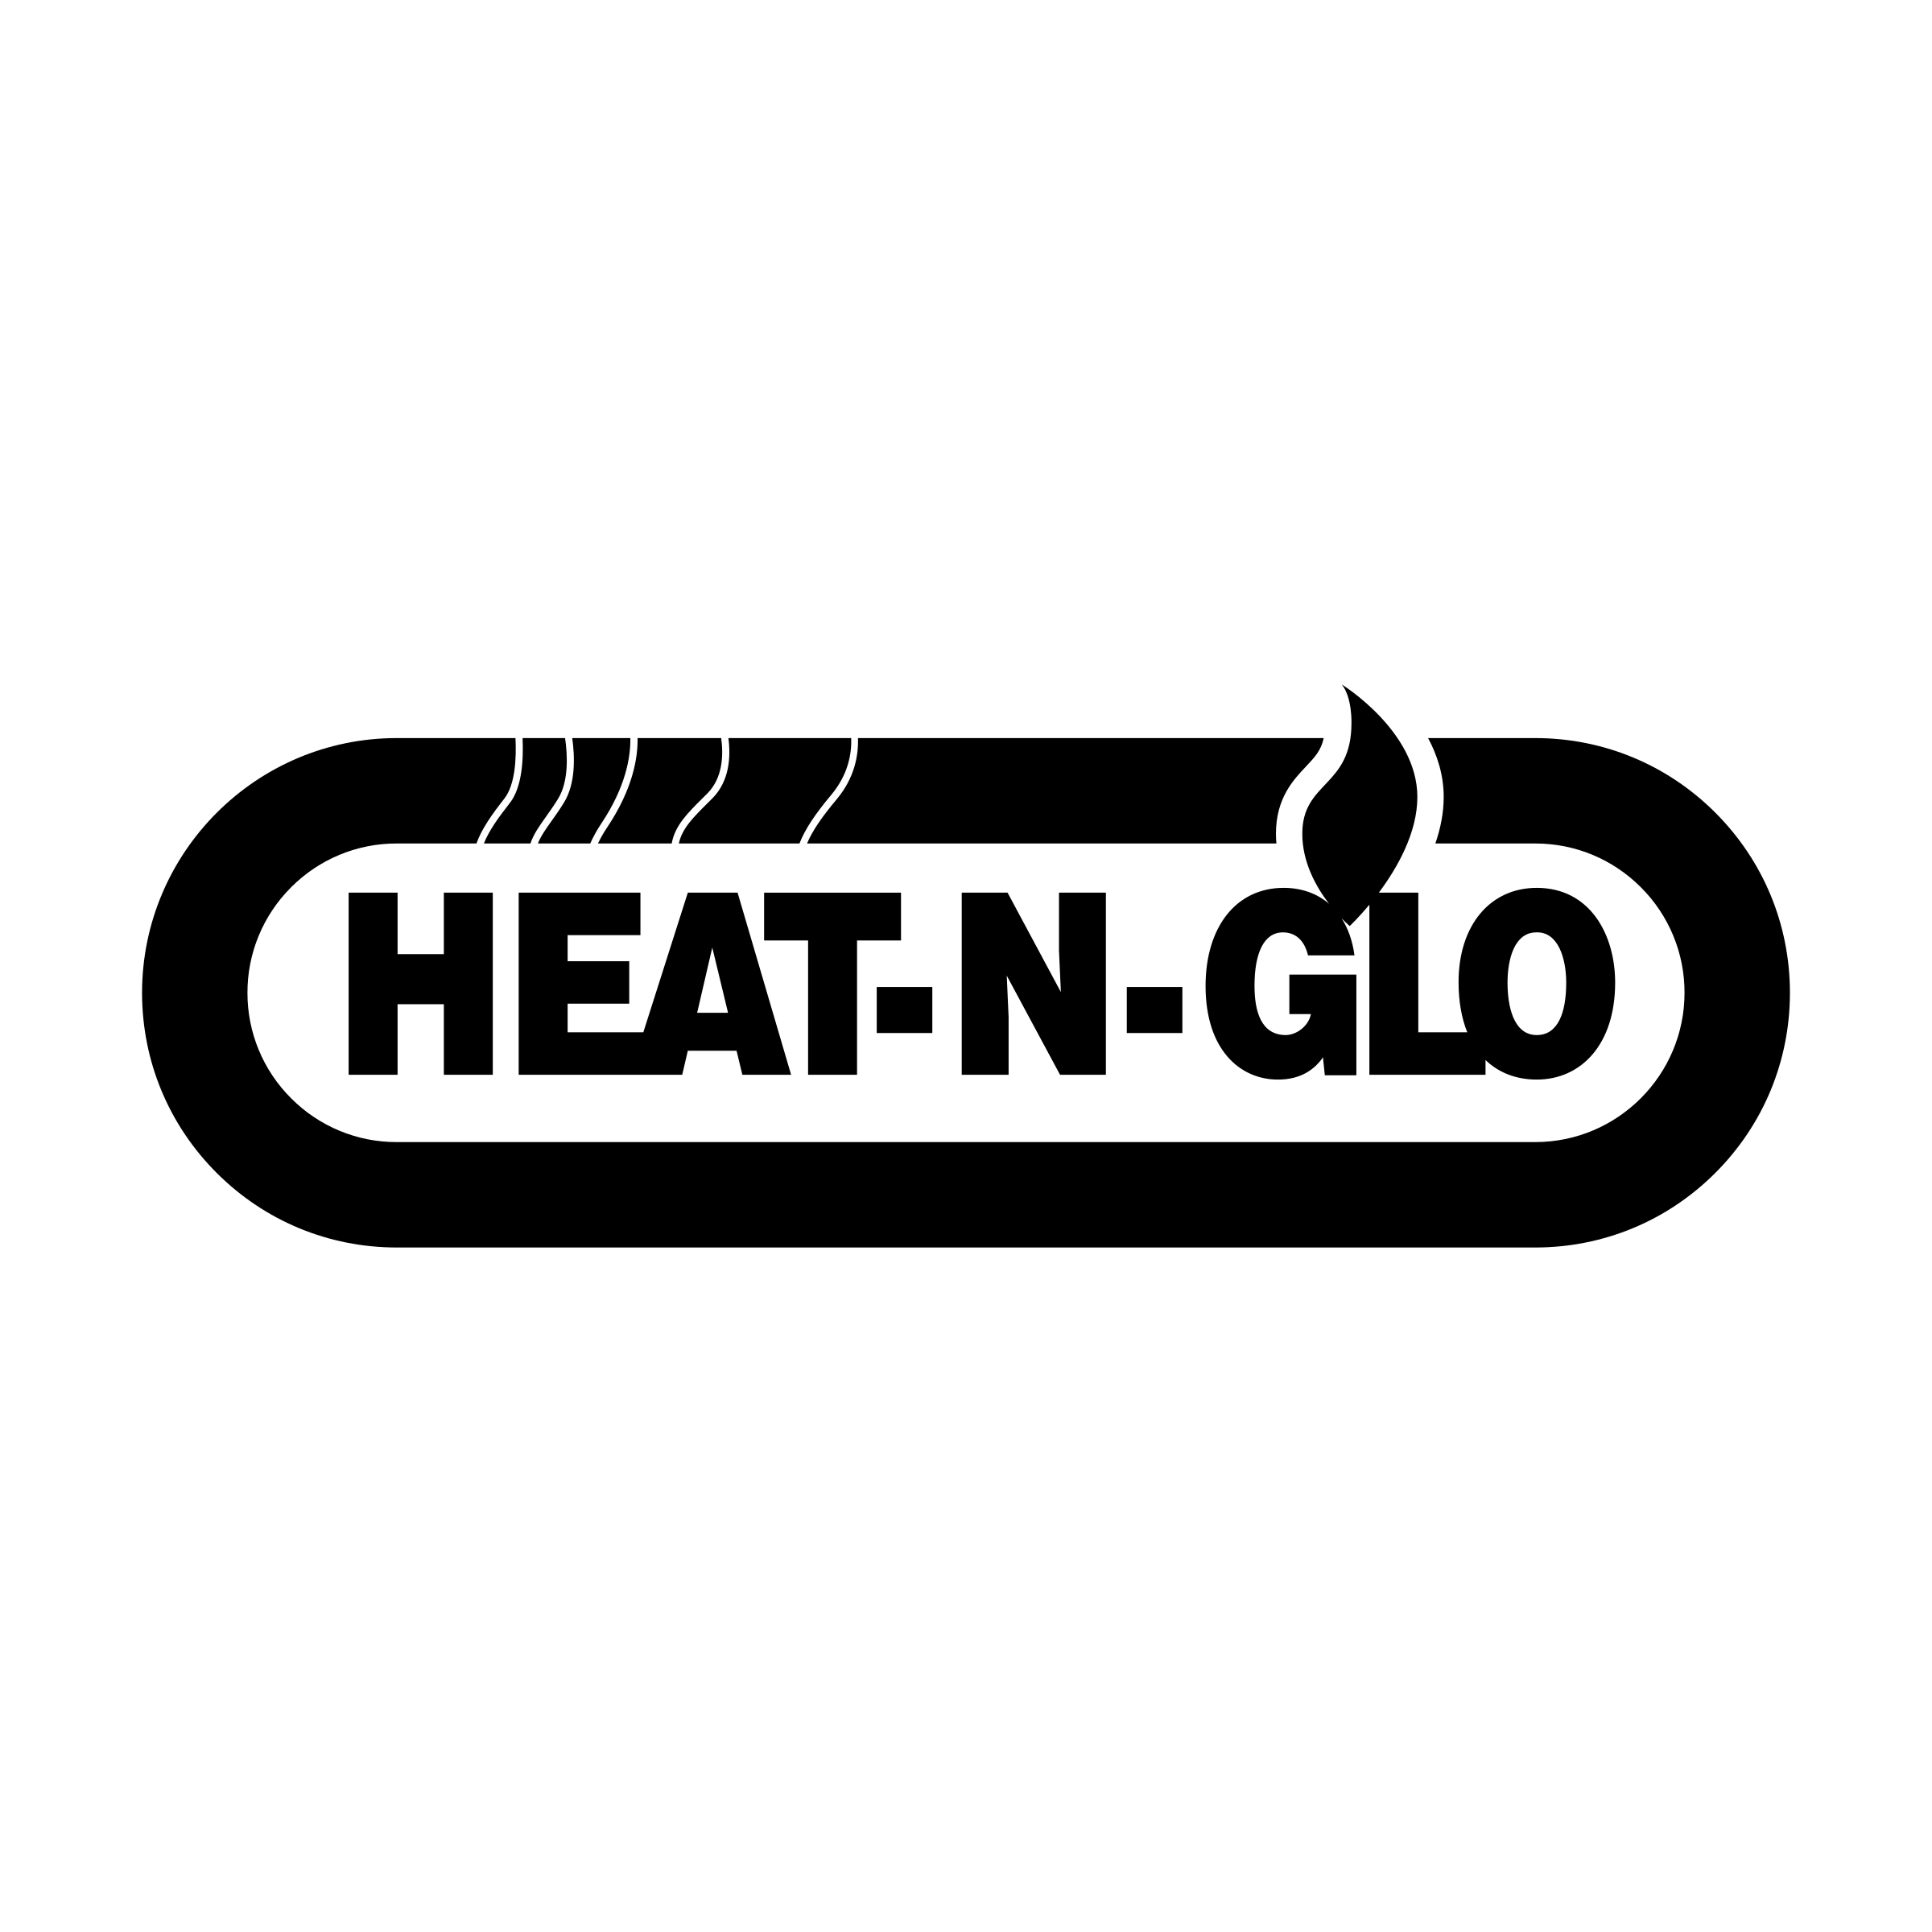 Glo Logo - Heat N Glo Logo PNG Transparent & SVG Vector - Freebie Supply